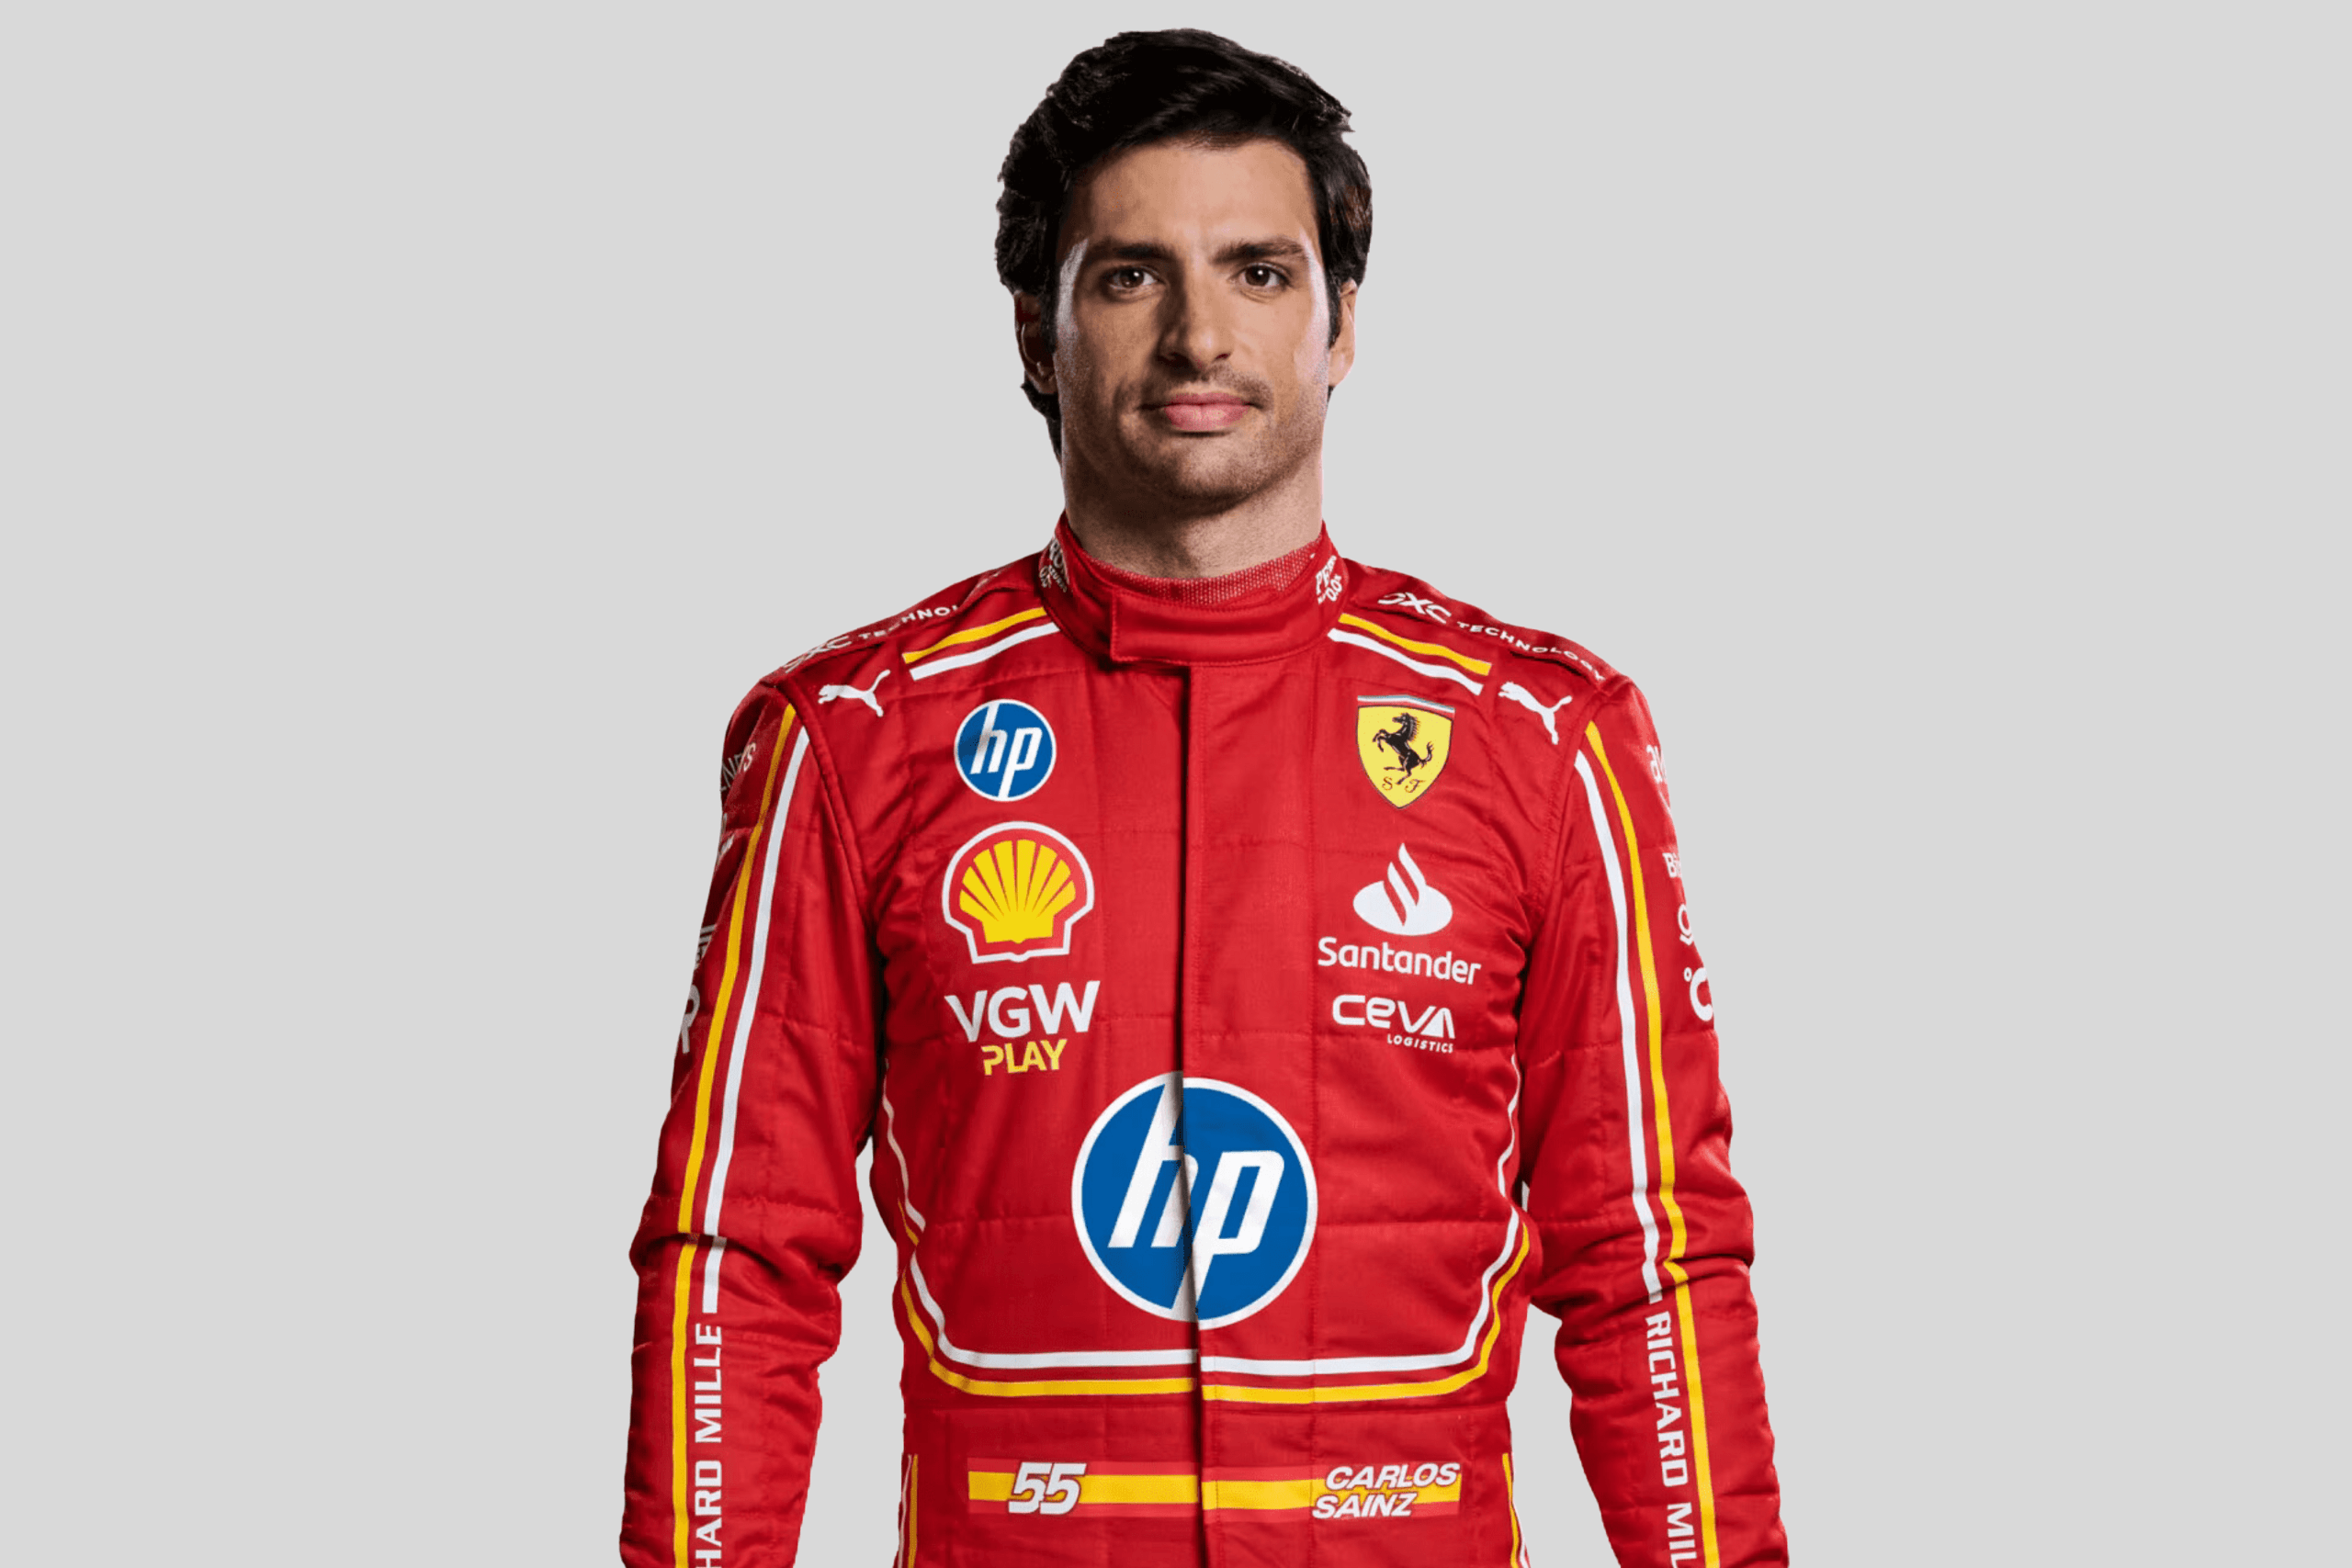 Ferrari-coureur Carlos Sainz